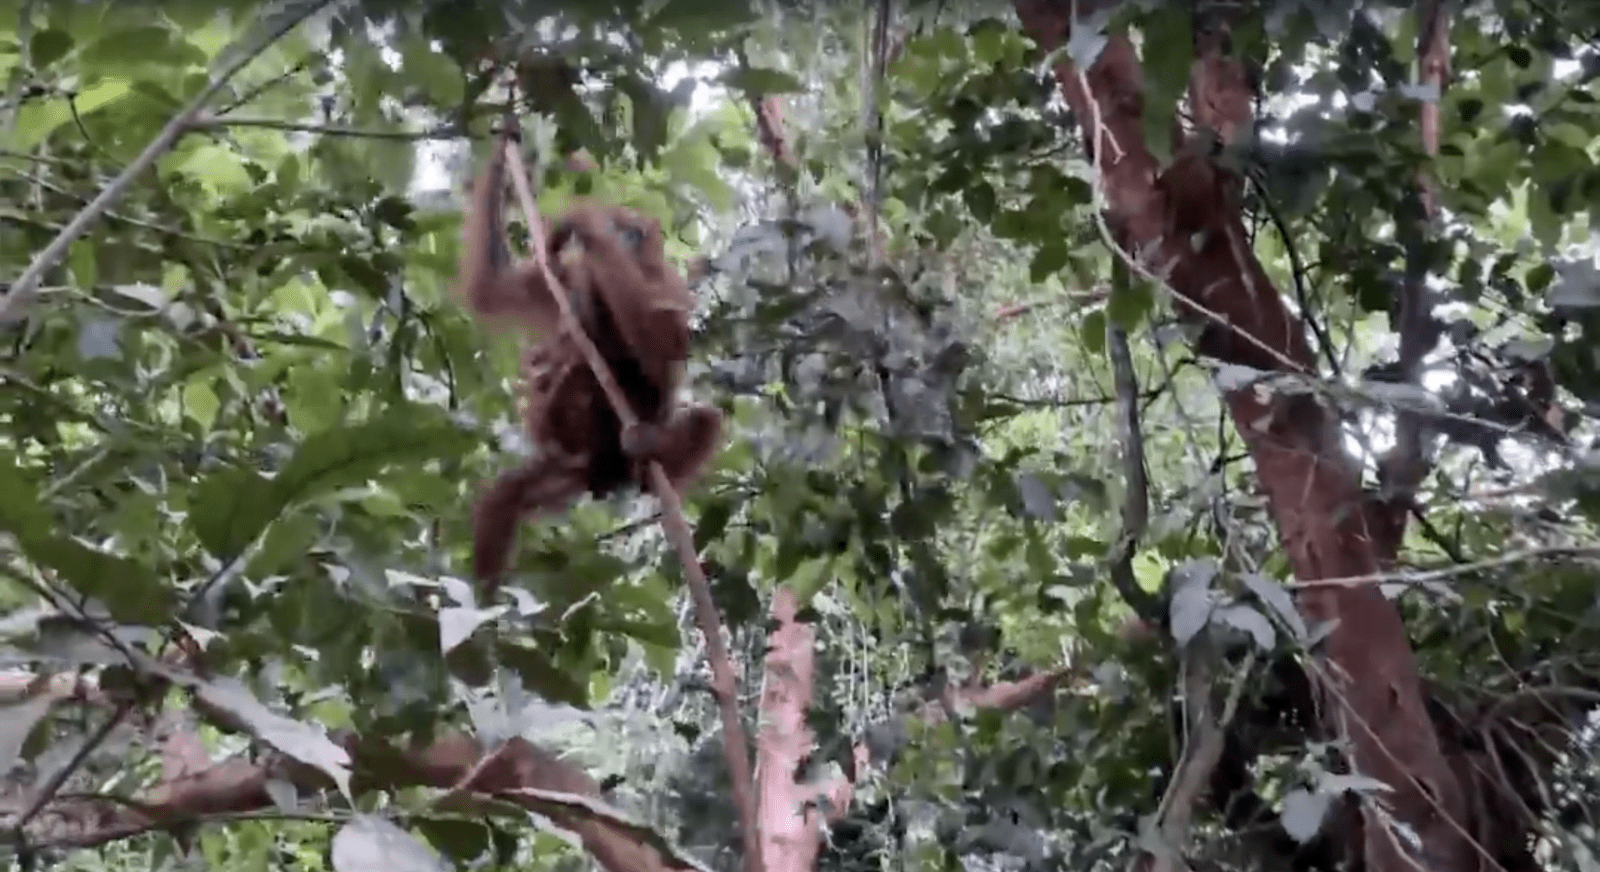 Orangutan sumatera langsung memanjat pohon saat dilepasliarkan di kawasan Taman Nasional Gunung Leuser. | Foto: Garda Animalia